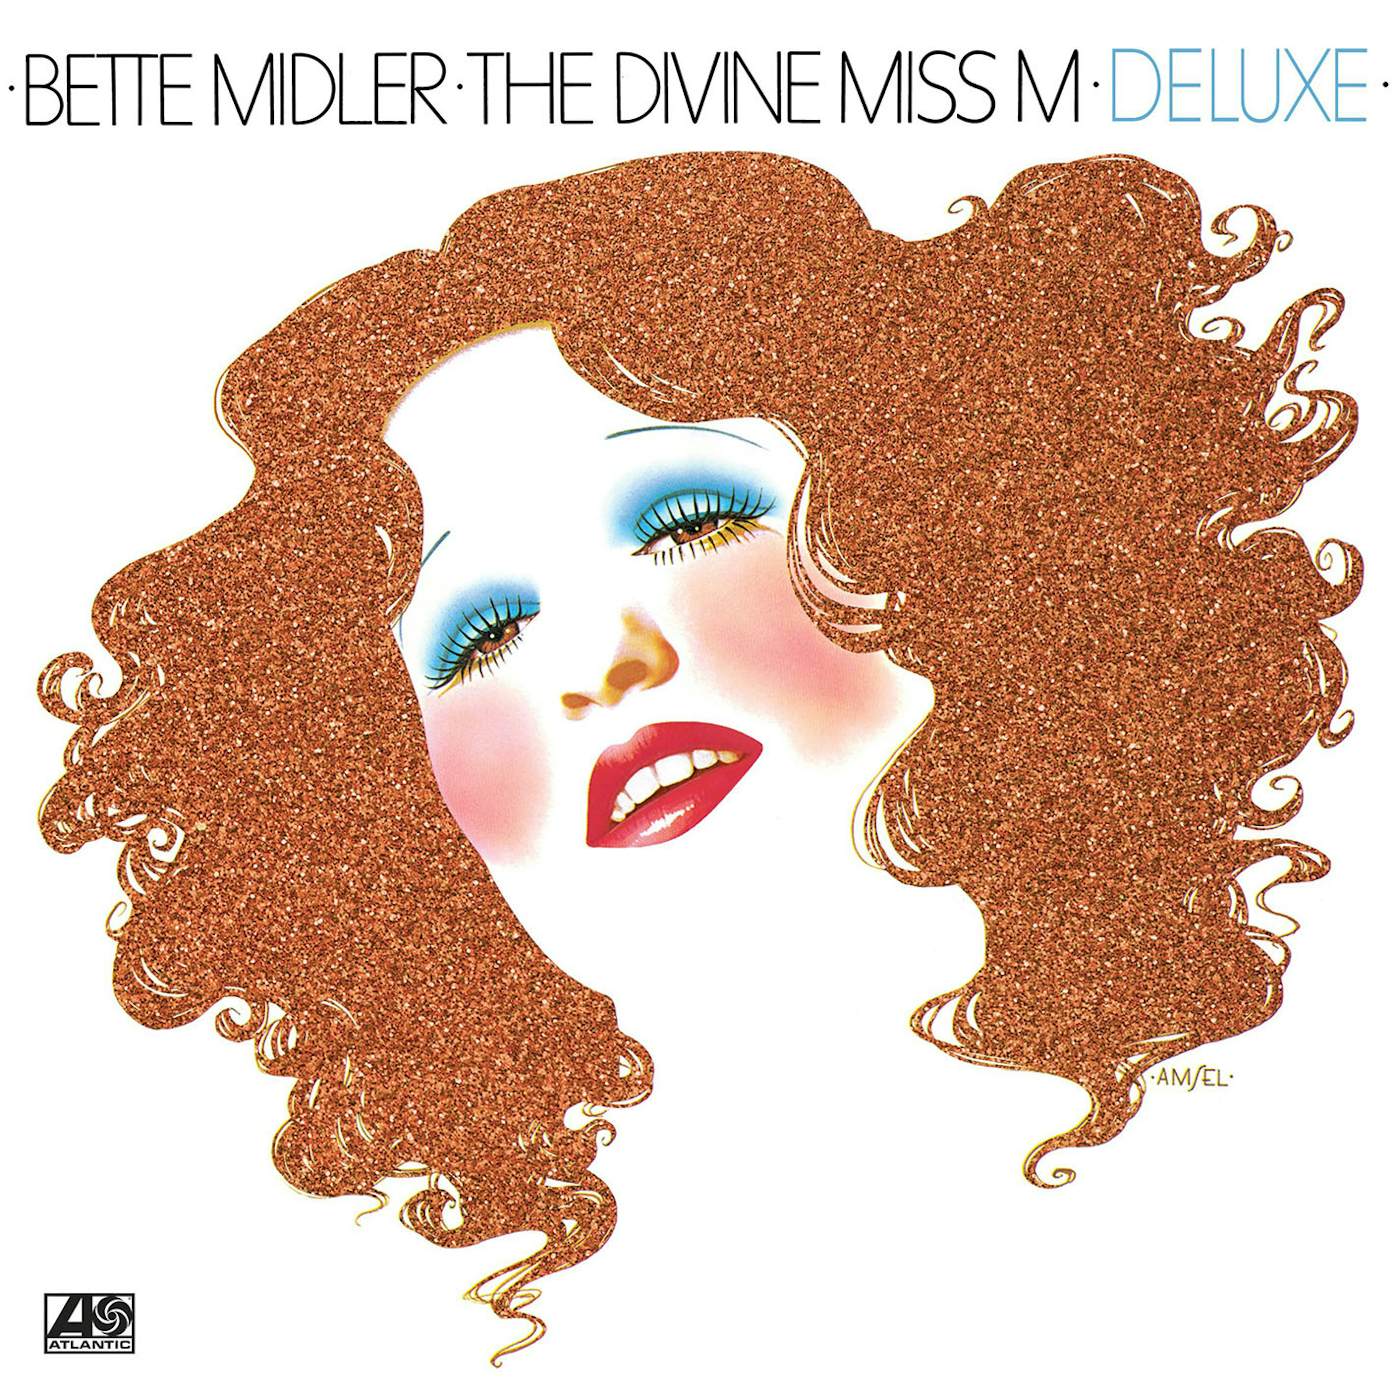 Bette Midler DIVINE MISS M CD